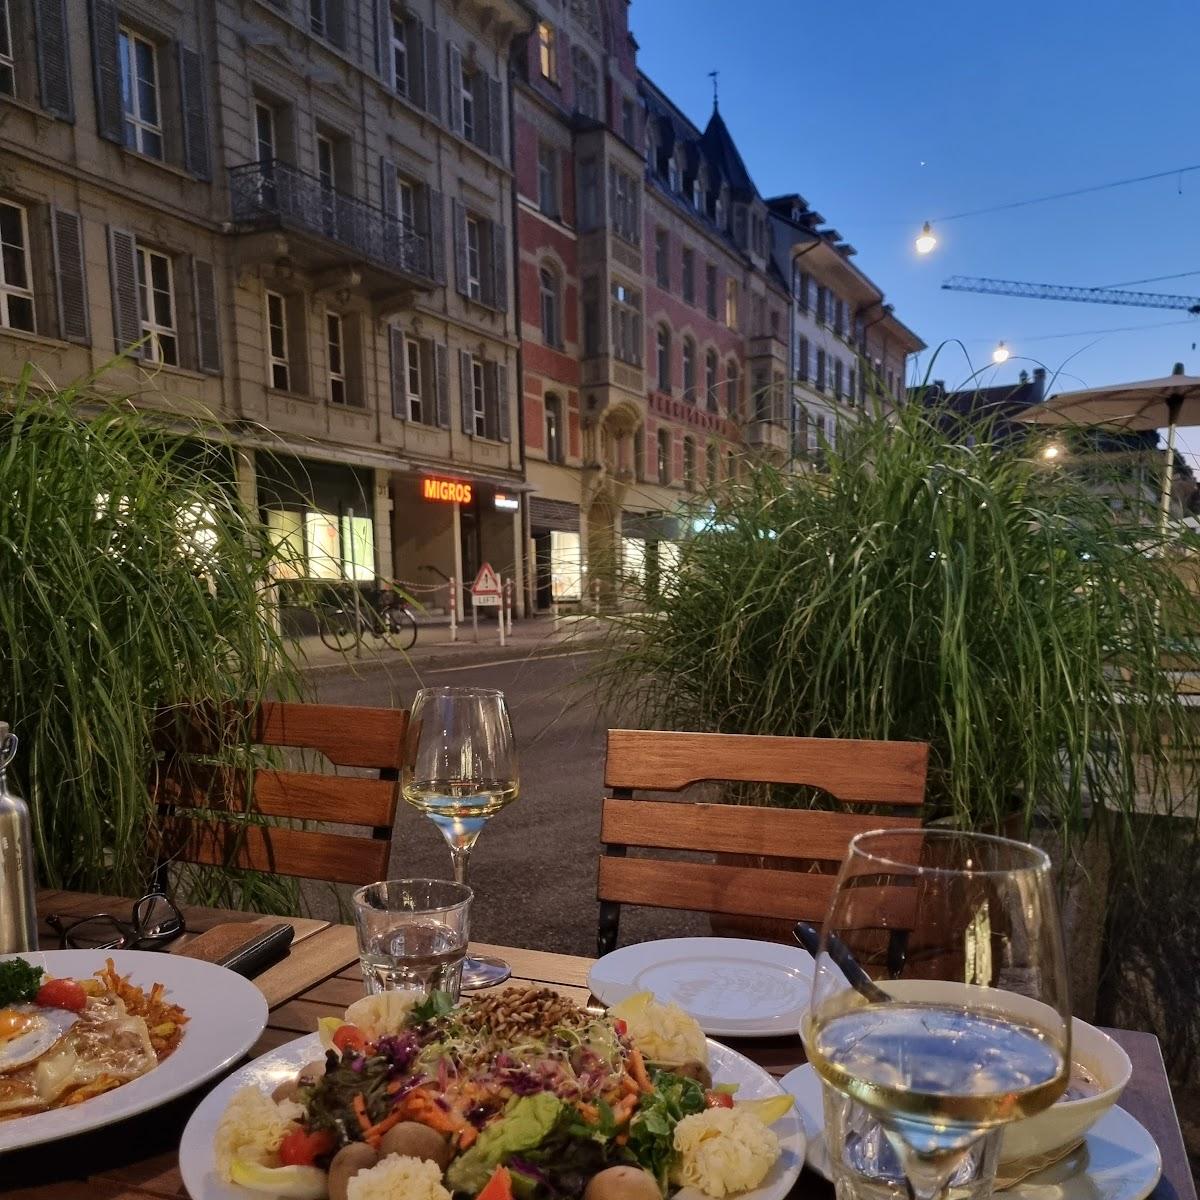 Restaurant "Lötschberg" in Bern